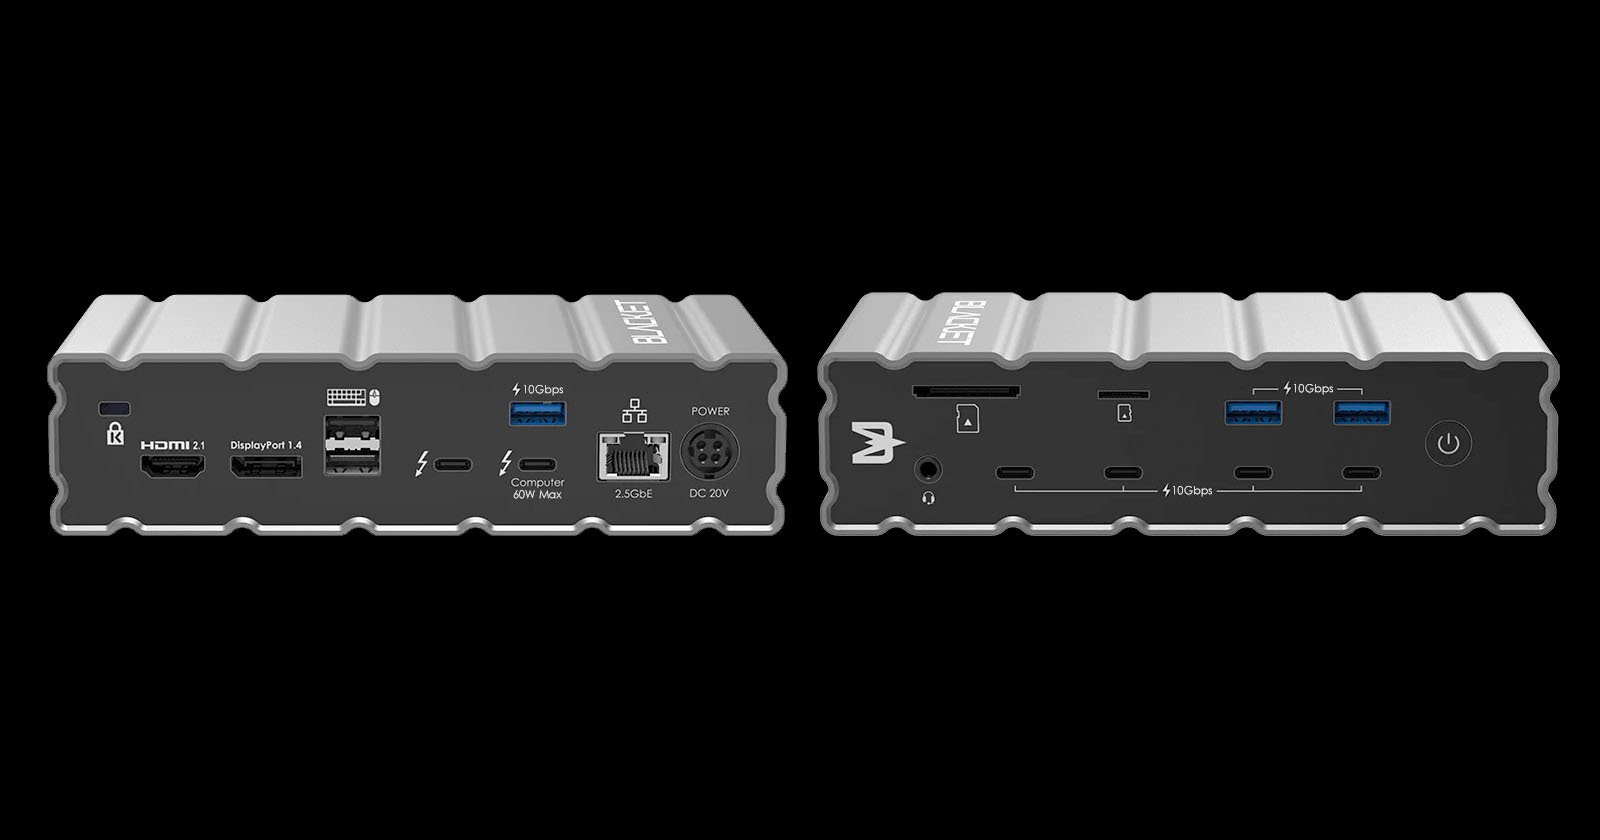 BlackJet RX-4 Raiden Thunderbolt Dock Adds 17 Ports to Your Desktop